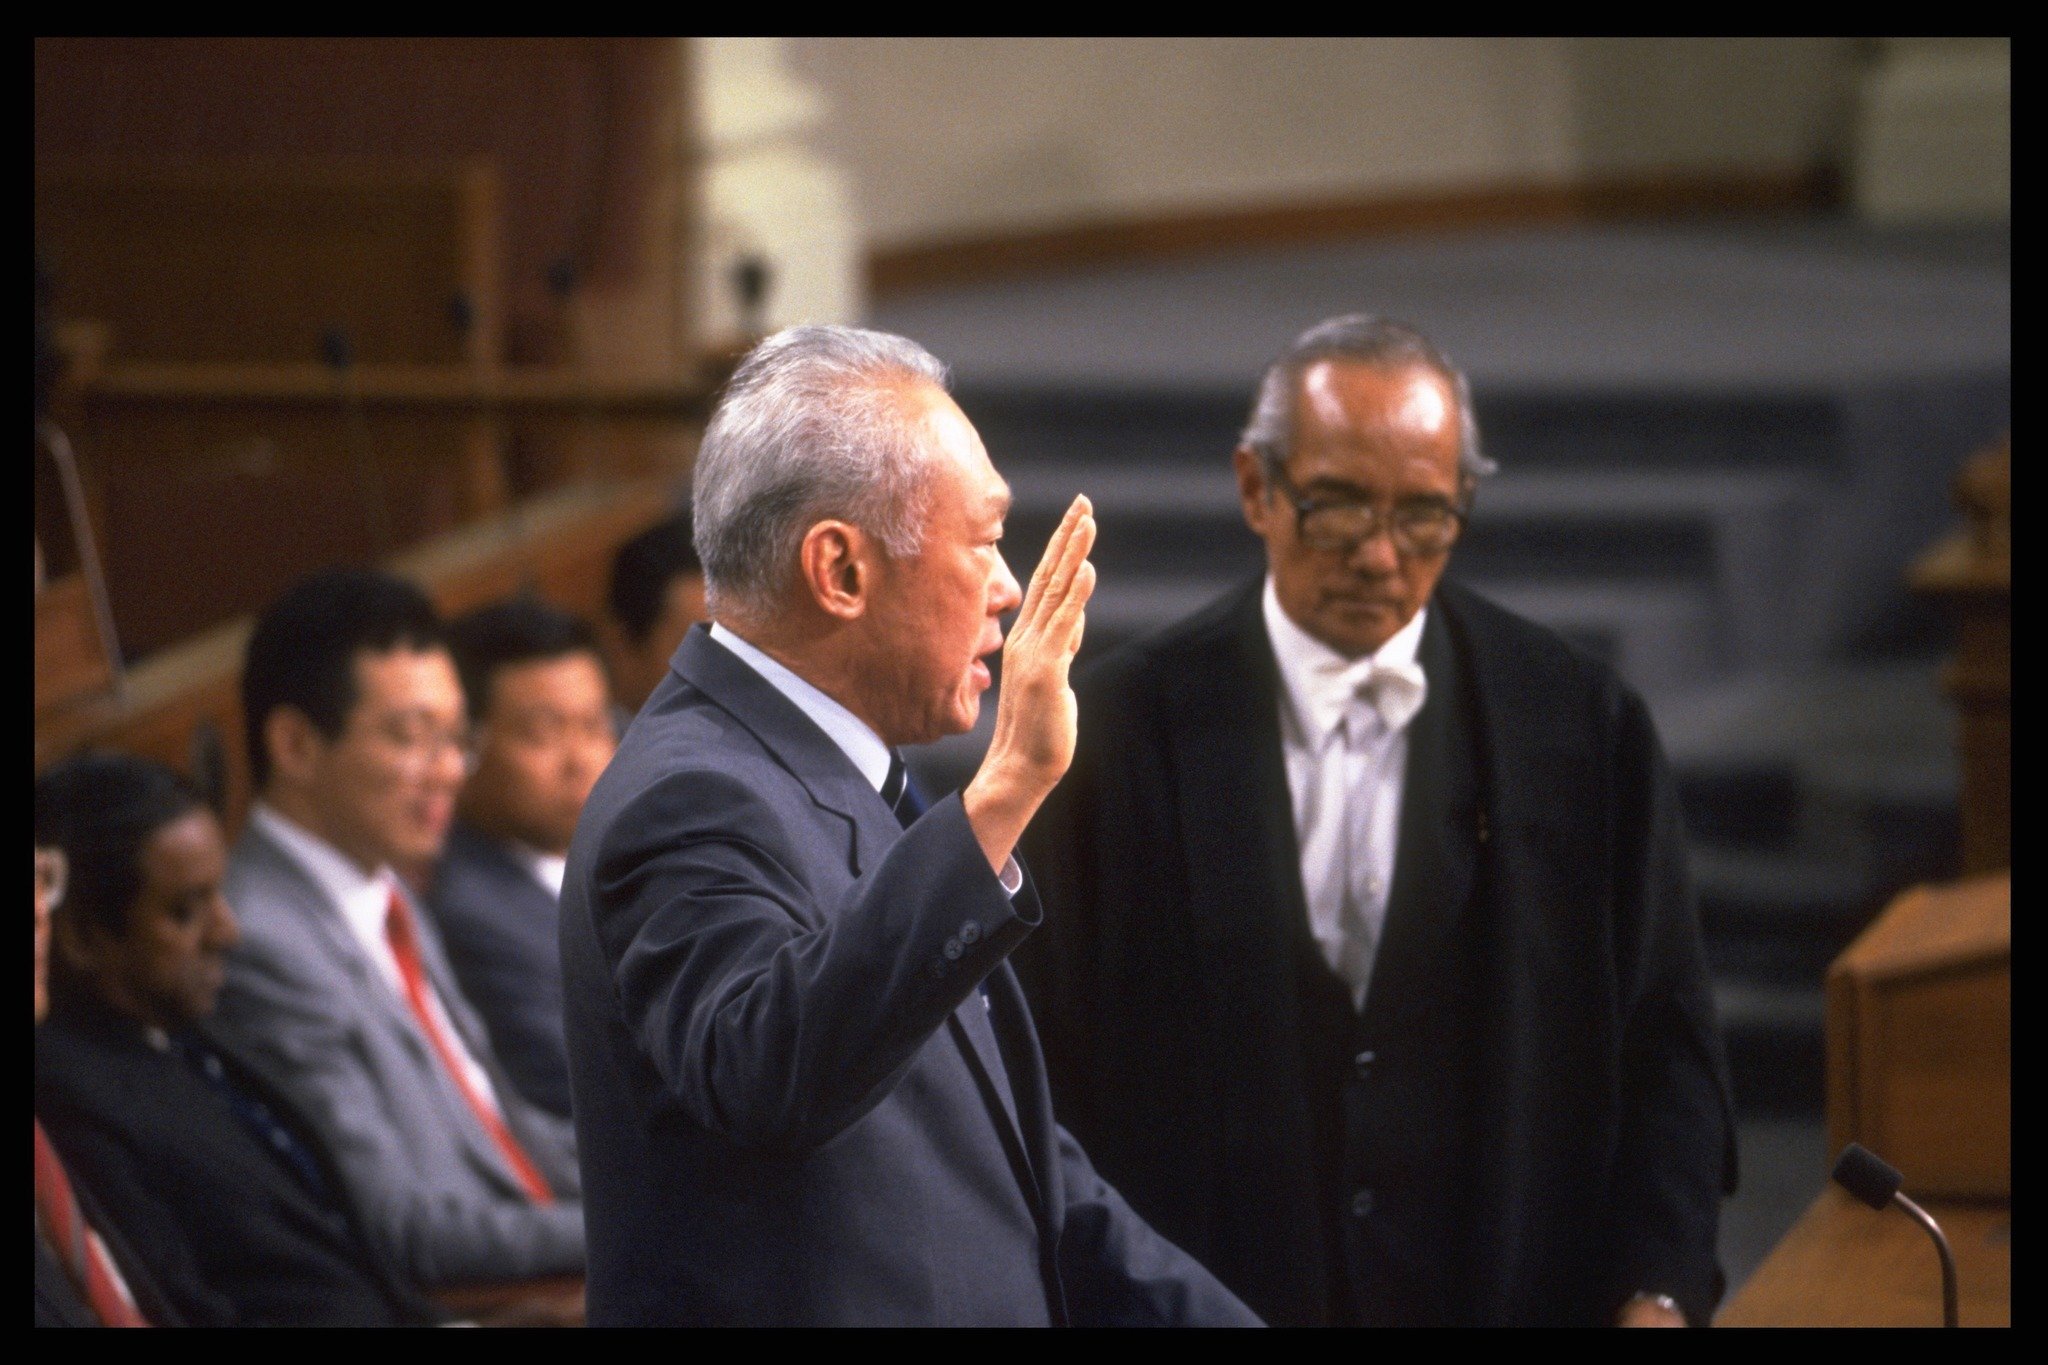 PM Lee and Lee Kuan Yew